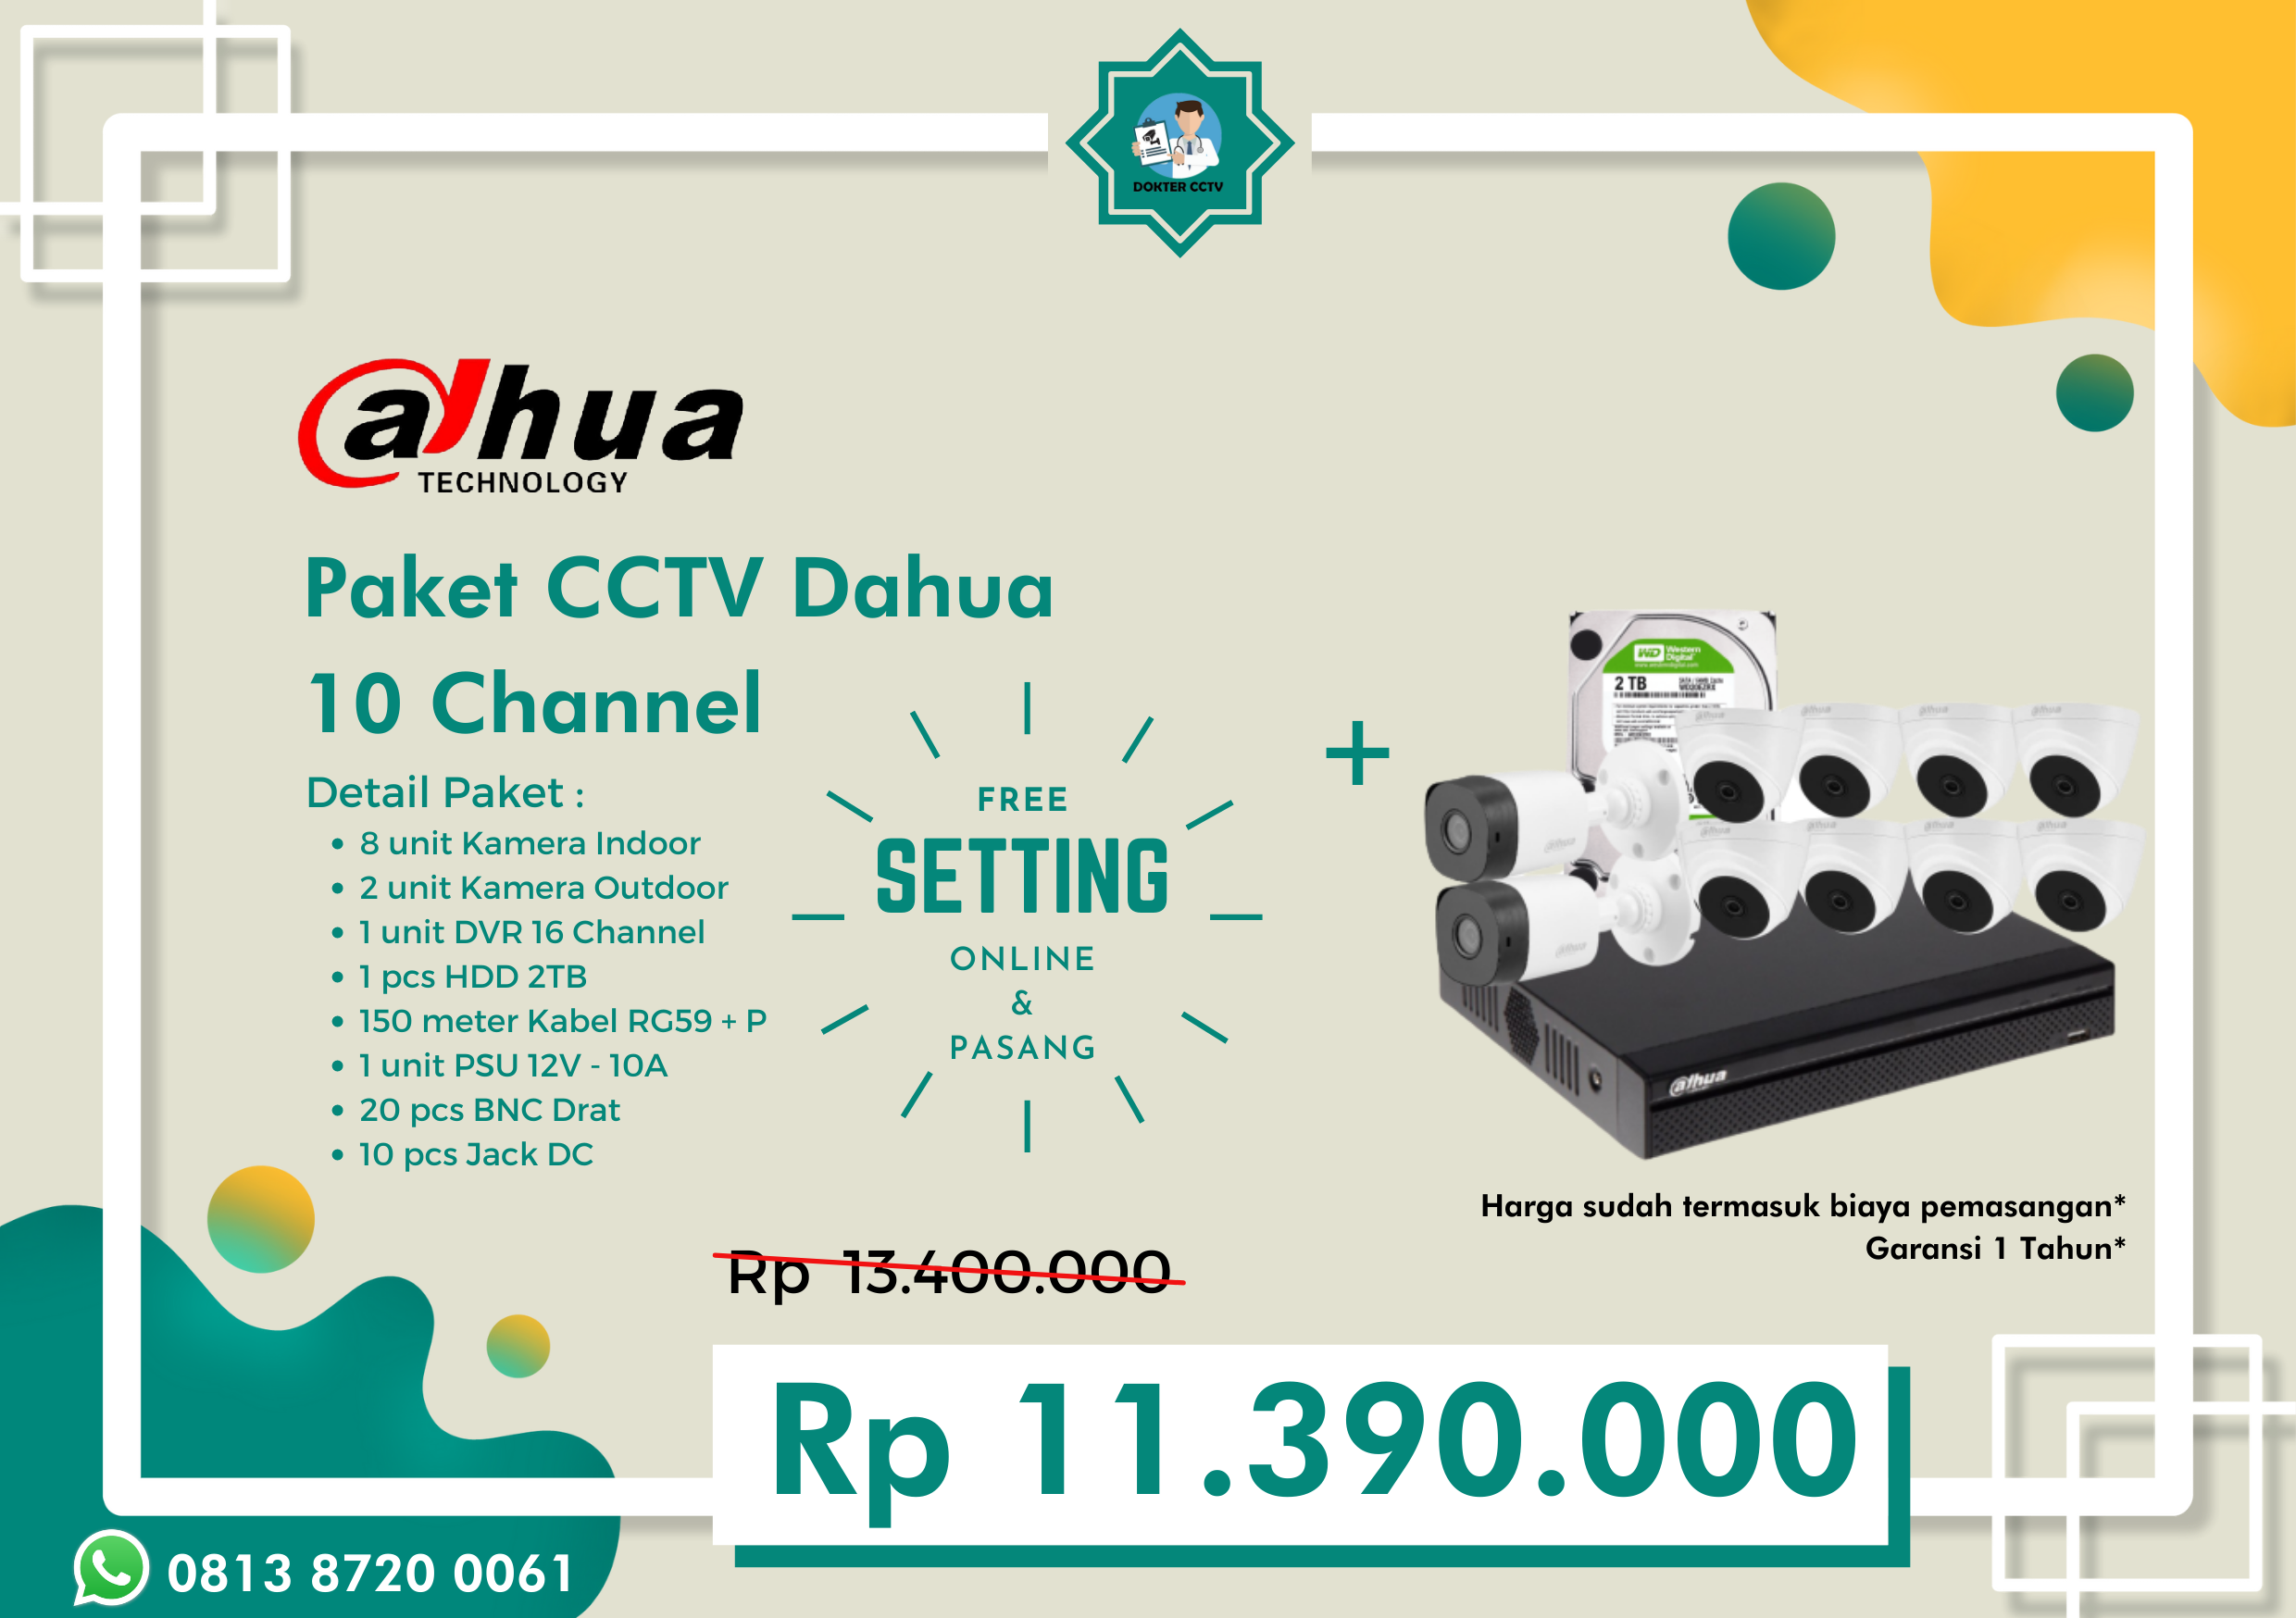 Paket CCTV Dahua 10 Channel